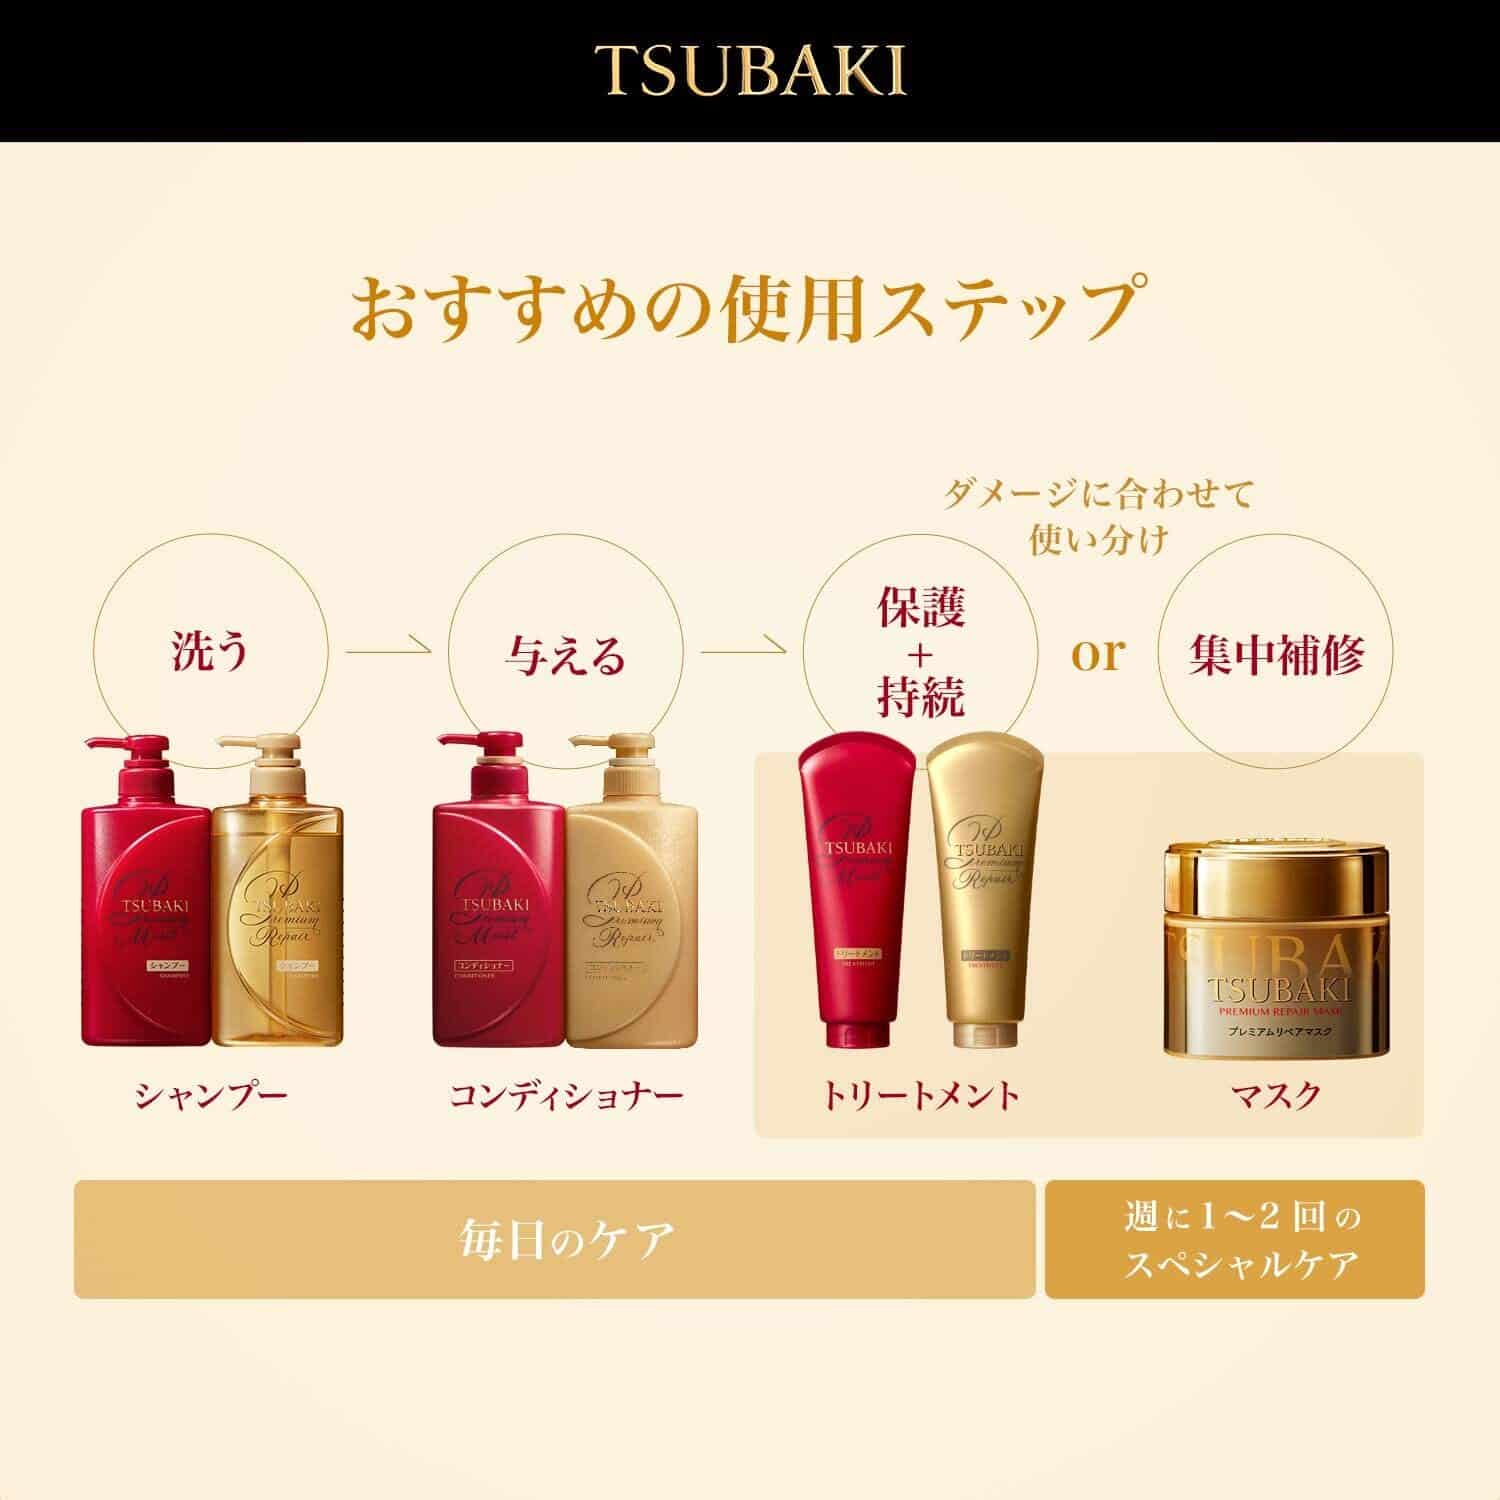 Shiseido TSUBAKI Premium Repair Conditioner 1 Pack(490 ml)